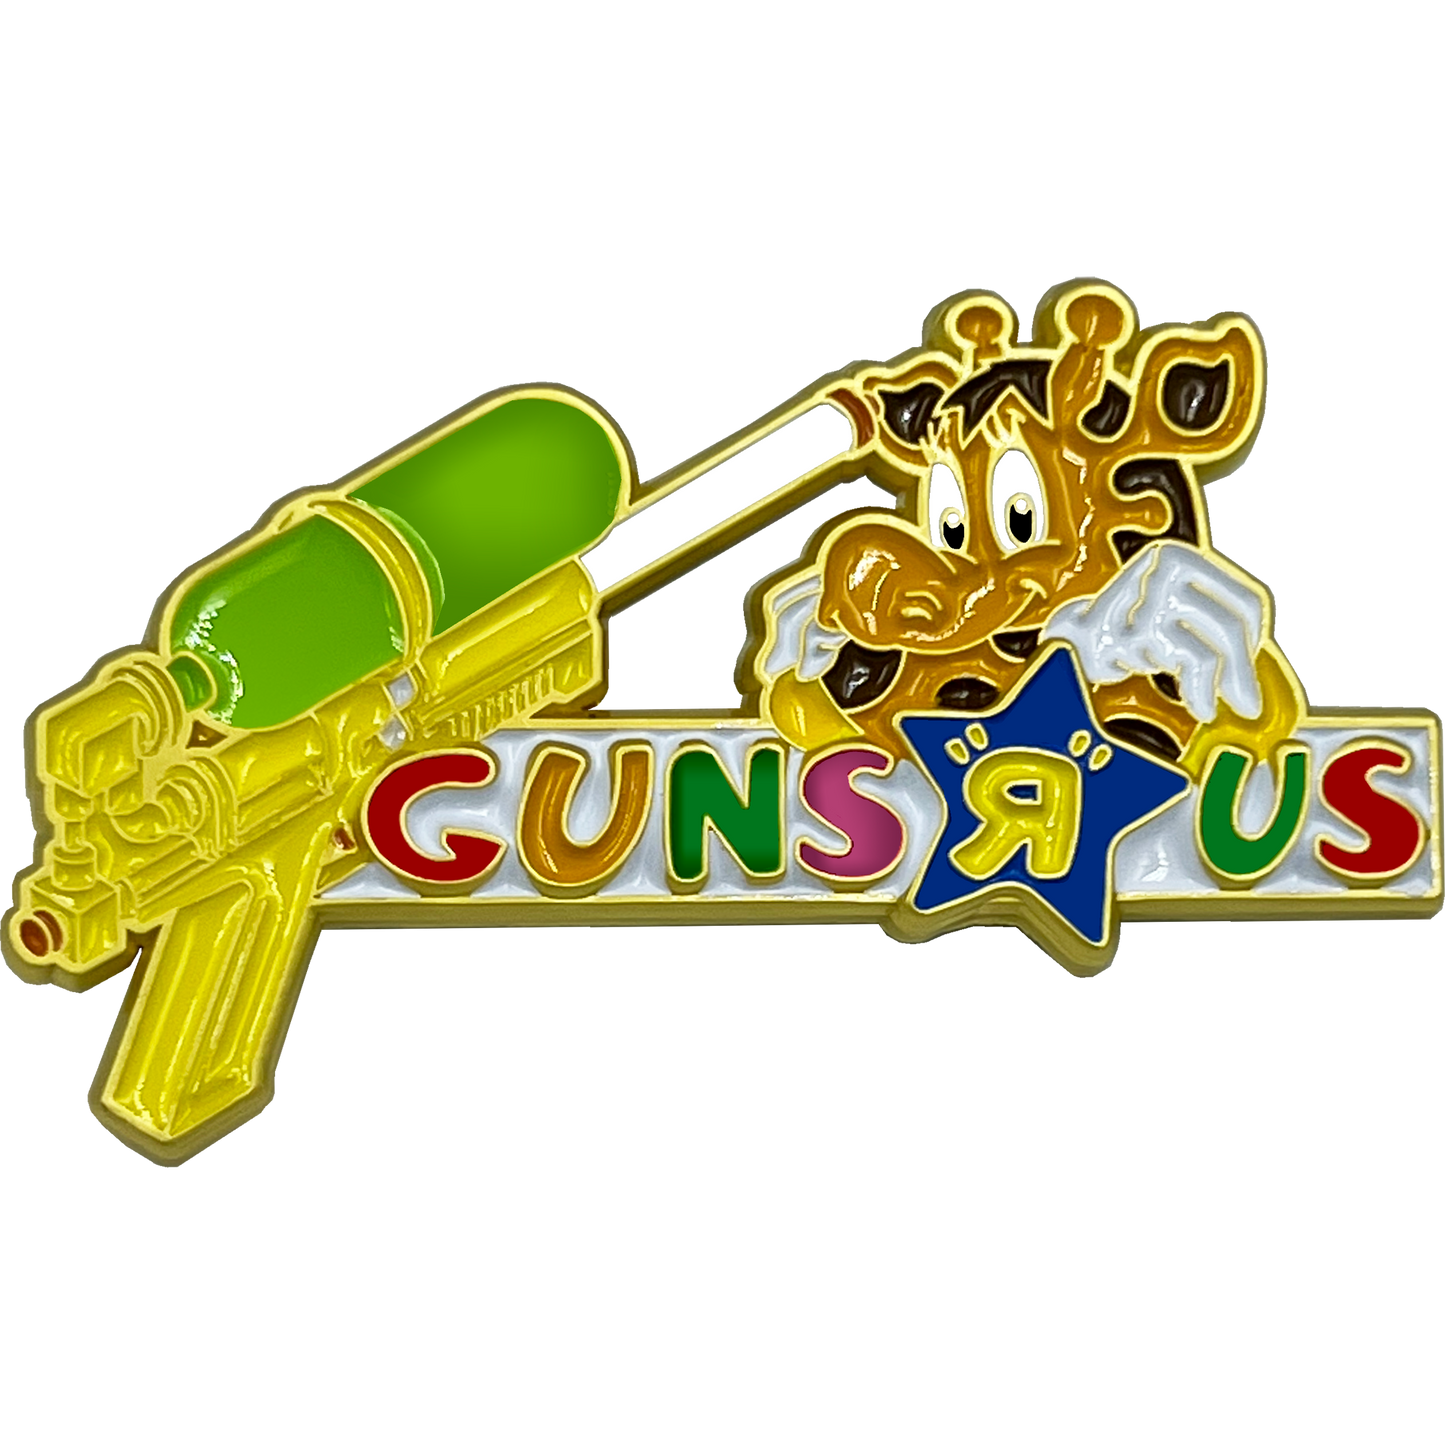 BL2-001-A Guns R Us Giraffe Pin super 2nd Amendment soaker